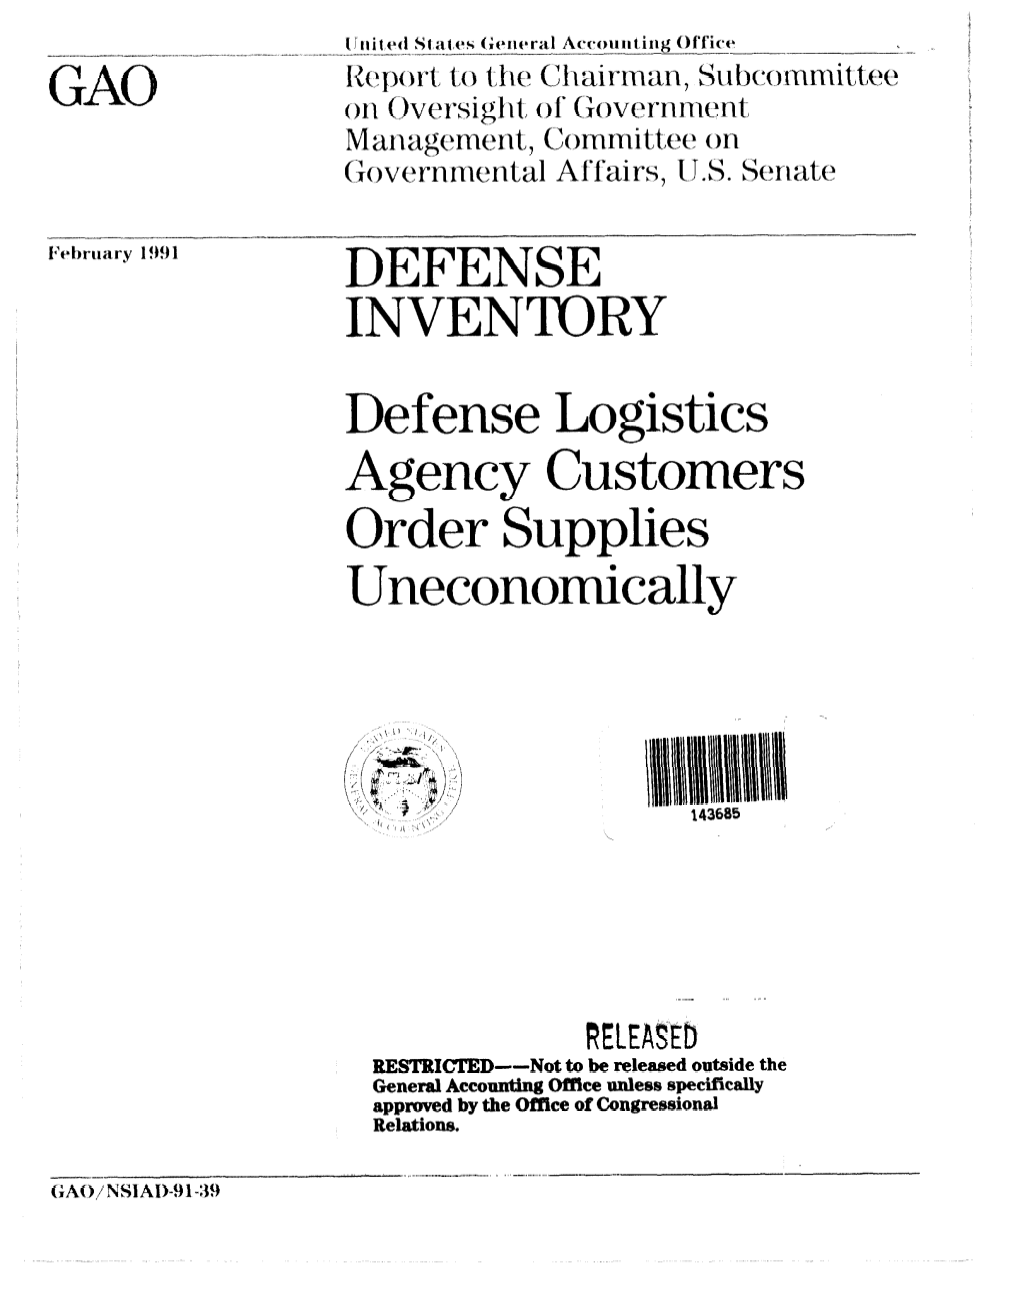 Defense Logistics Agency Customers Order Supplies Uneconomically